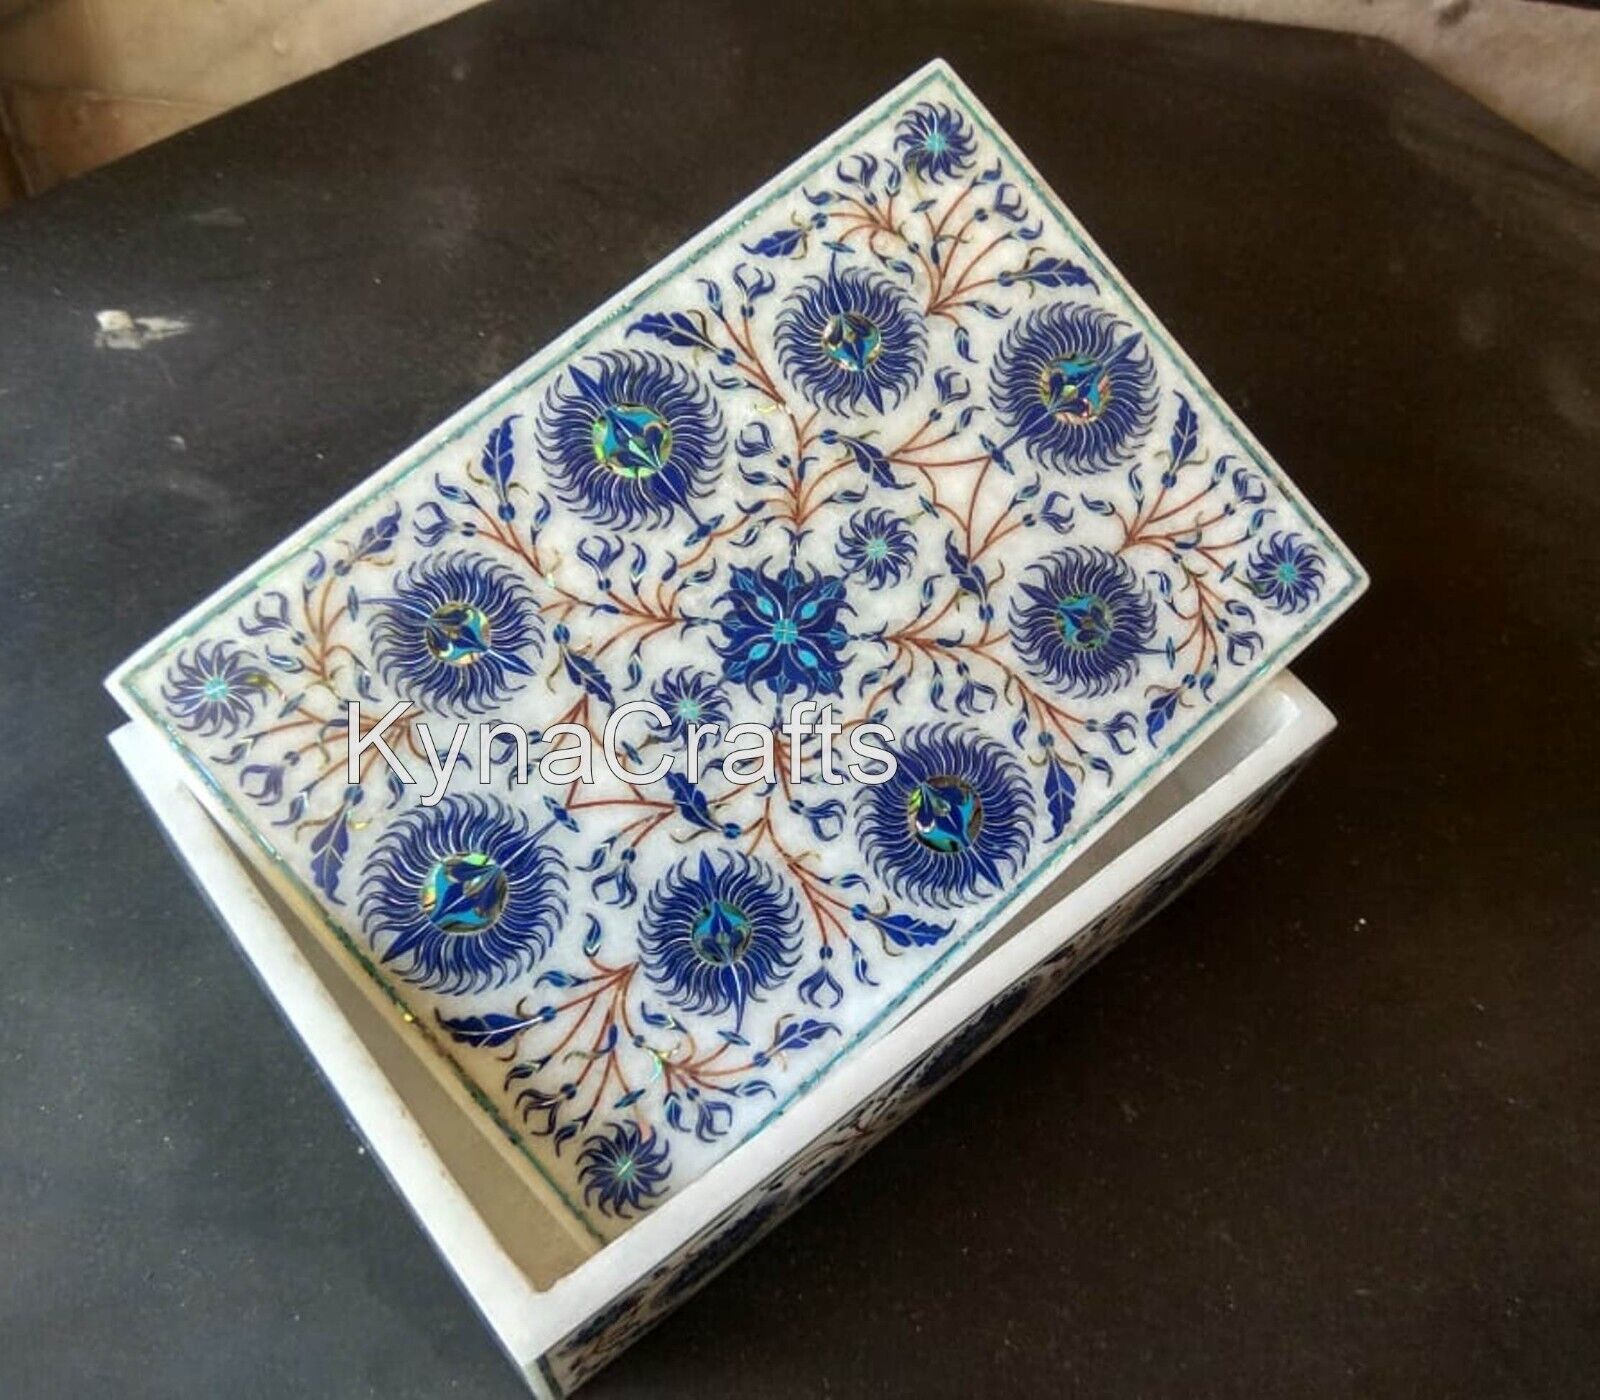 7 x 5 Inches Rectangle Marble Trinket Box Shiny Gemstone Inlay Work Tie Box